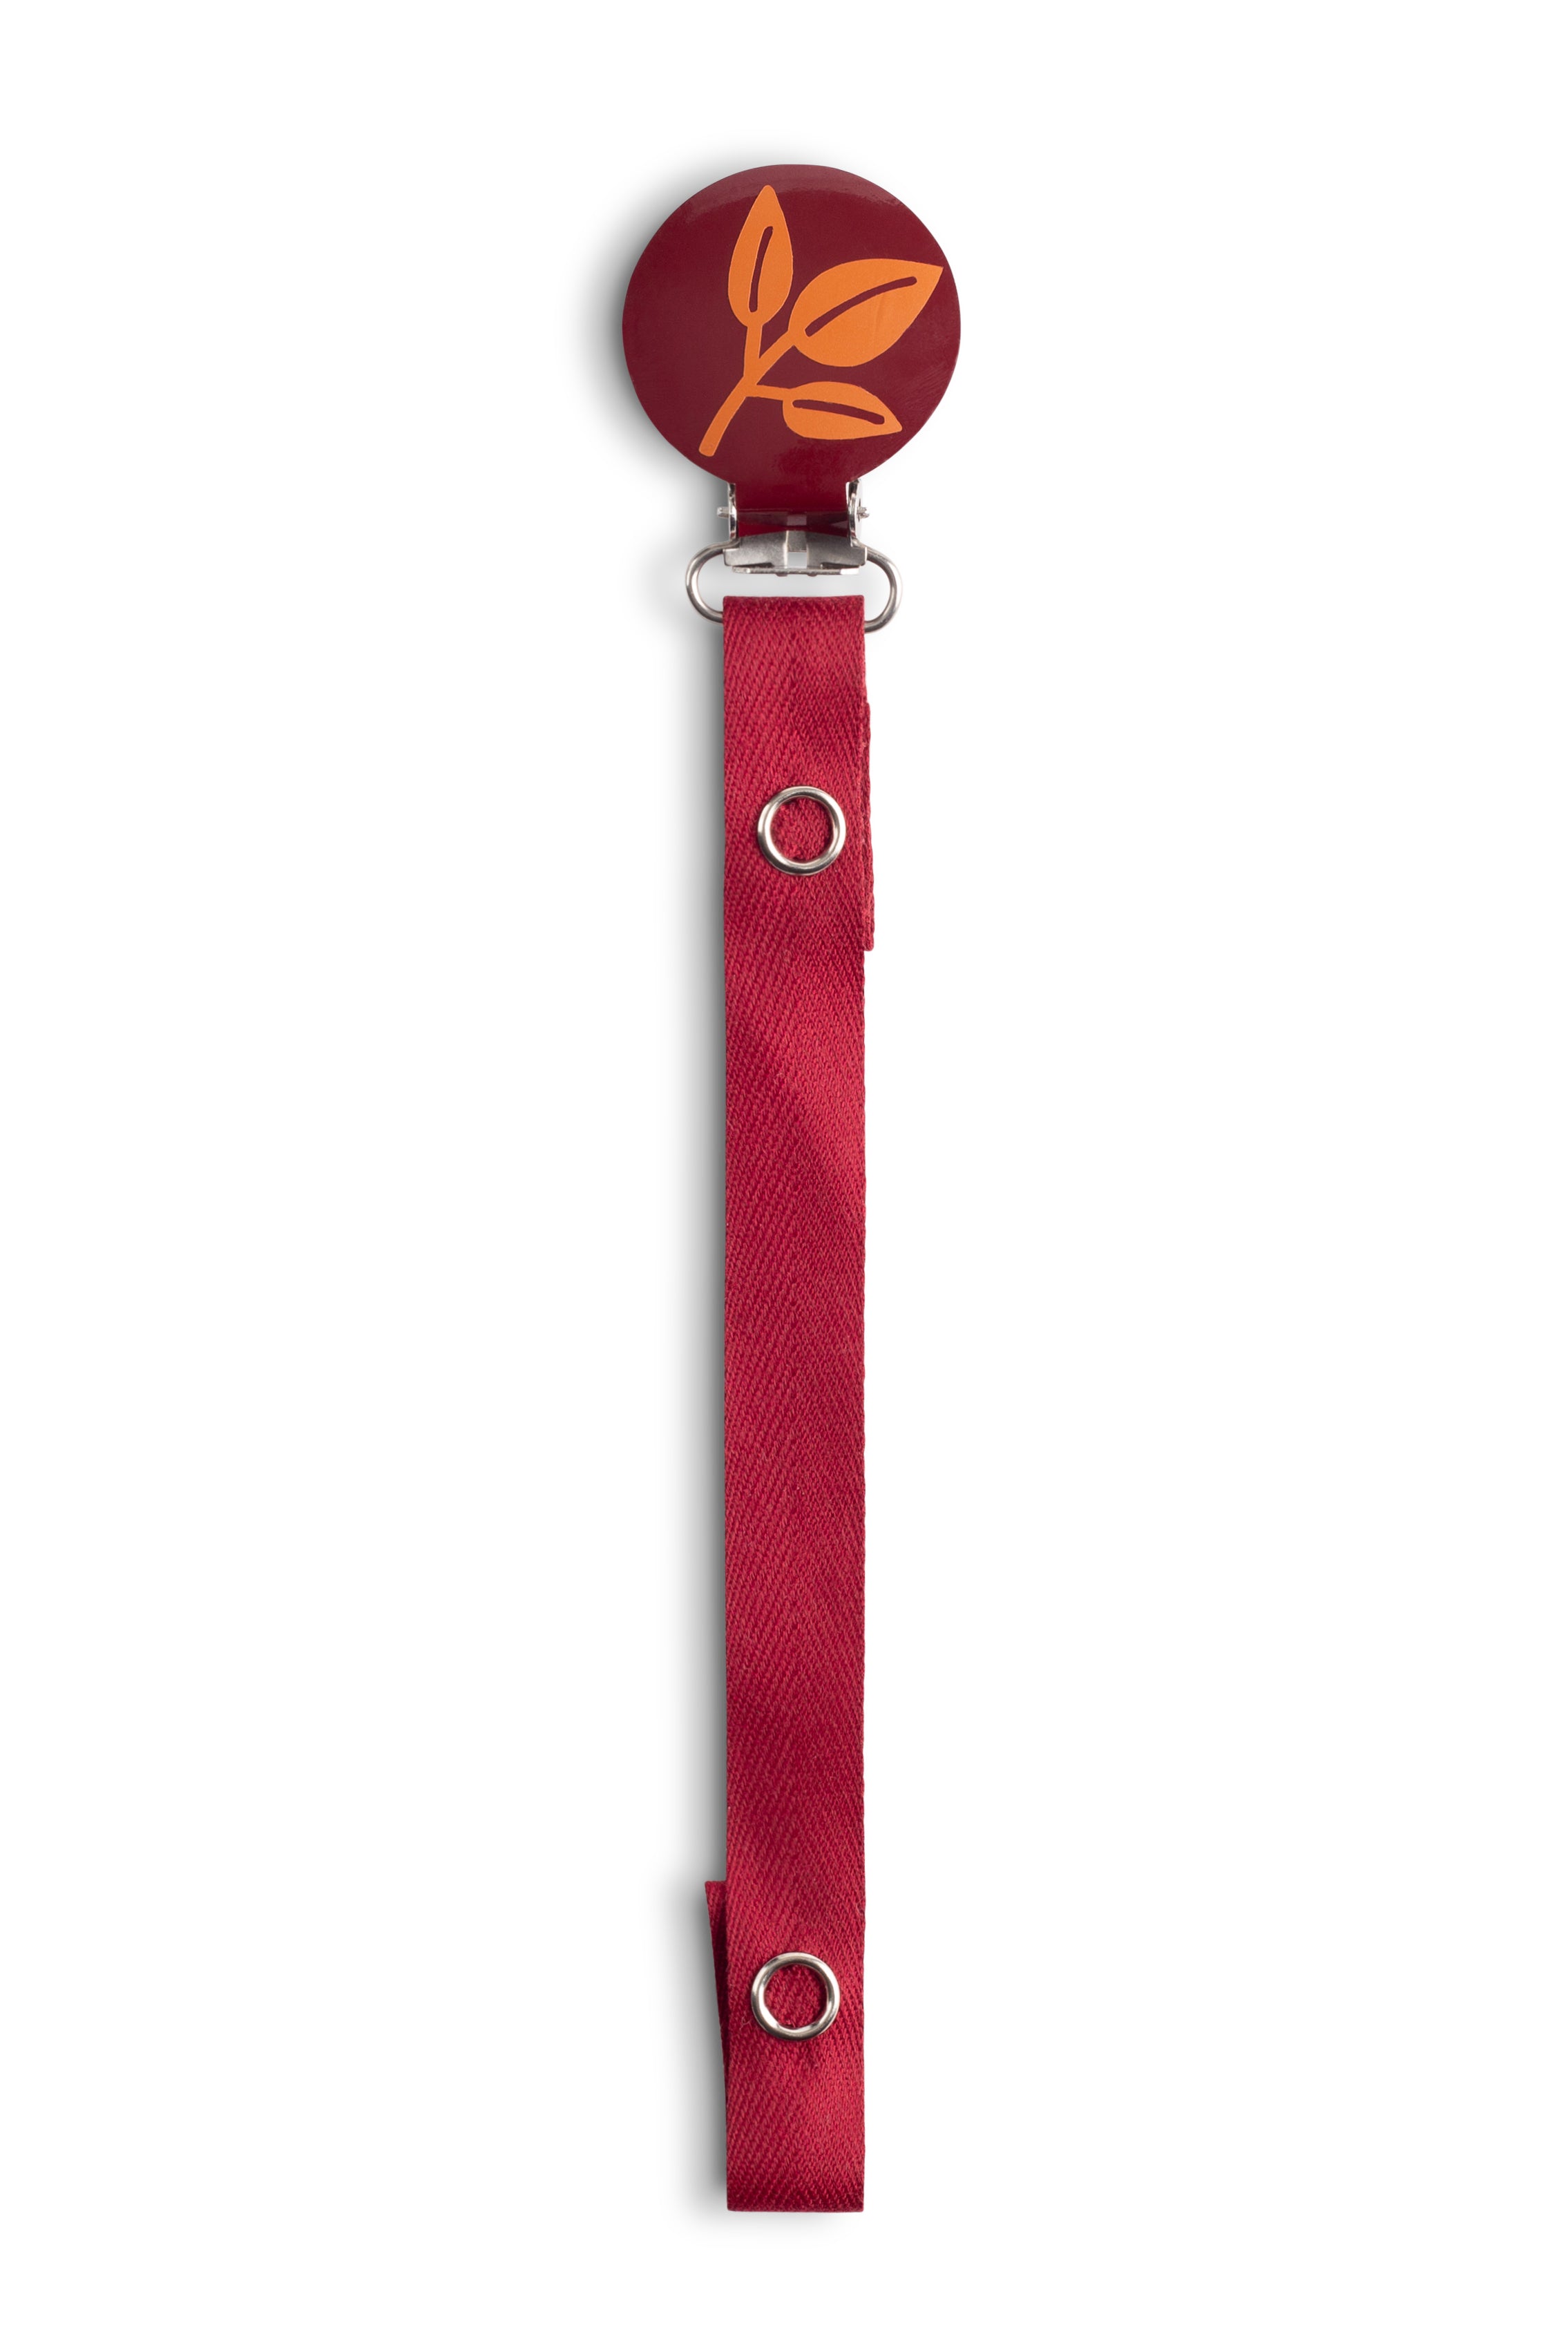 Classy Paci Crimson with Orange Leaf pacifier clip FW21-22